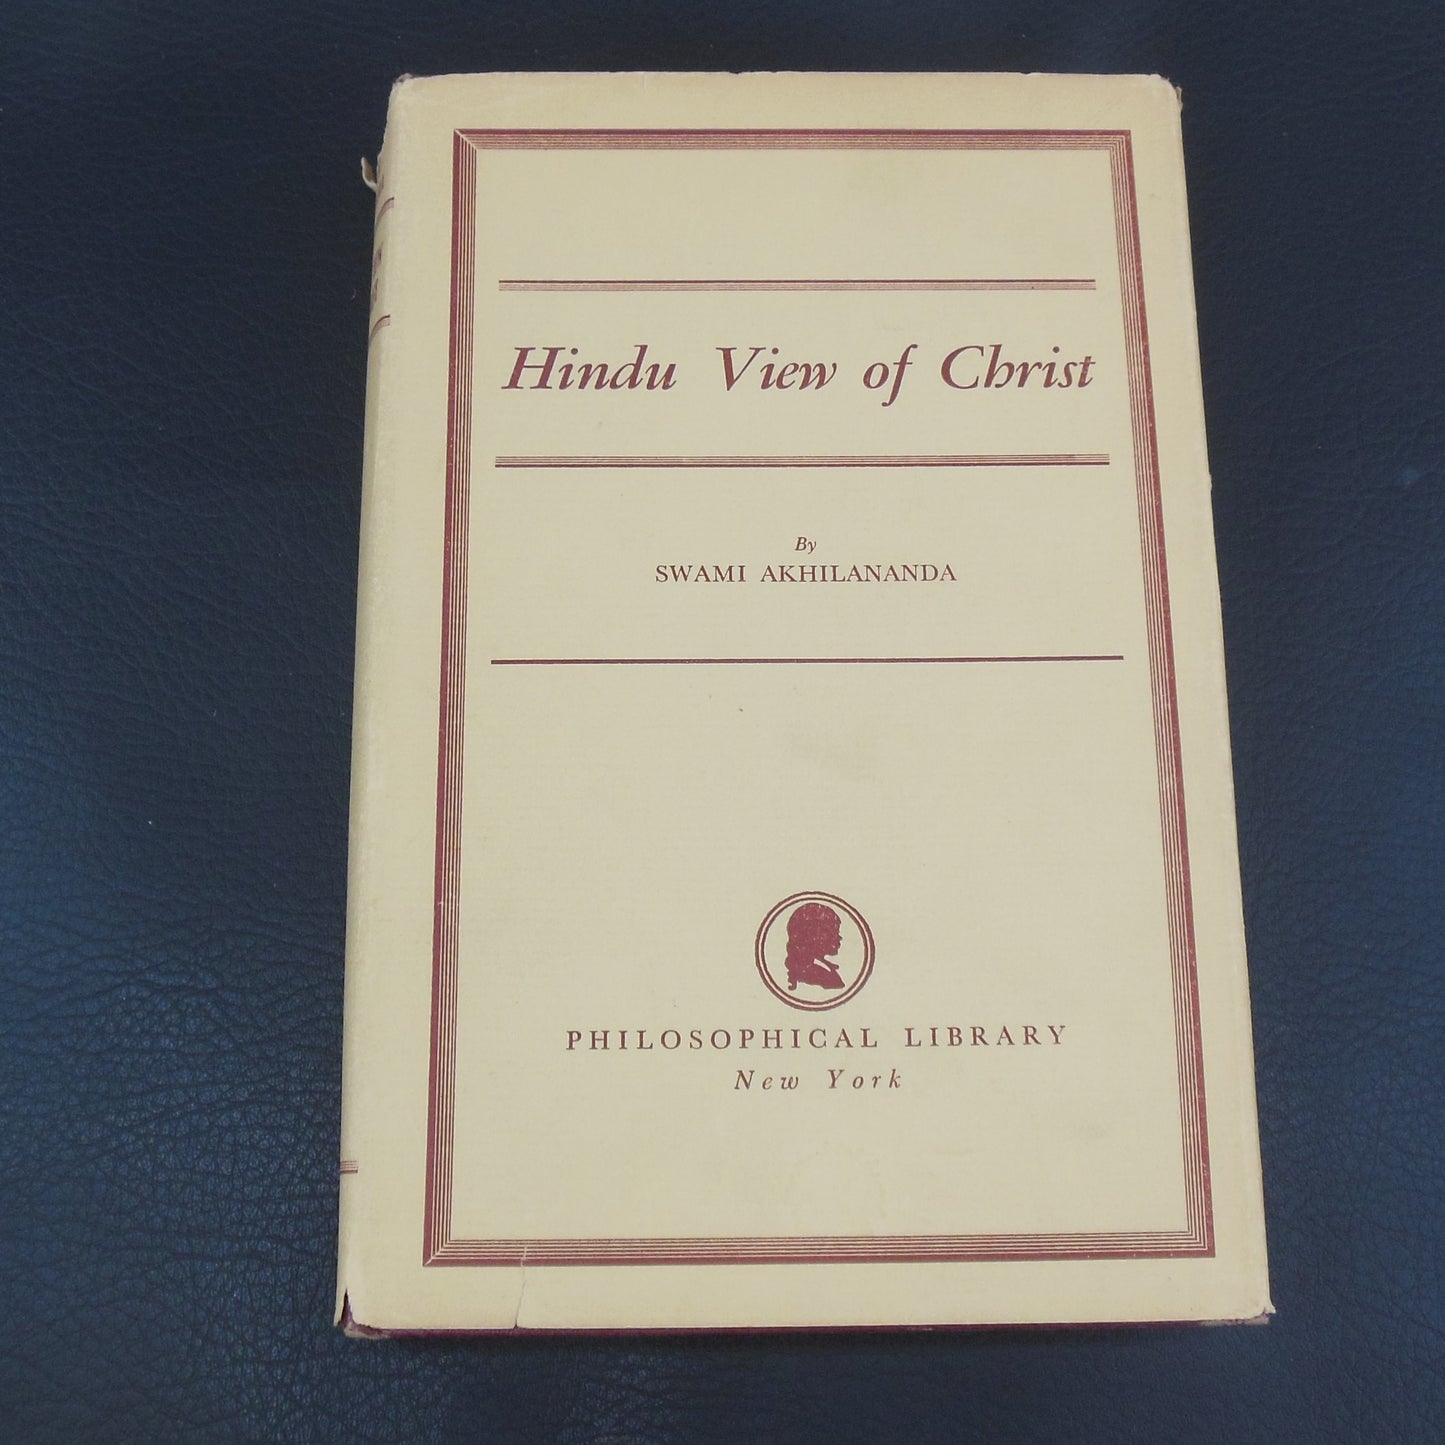 Swami Akhilananda Signed Book - Hindu View of Christ 1949